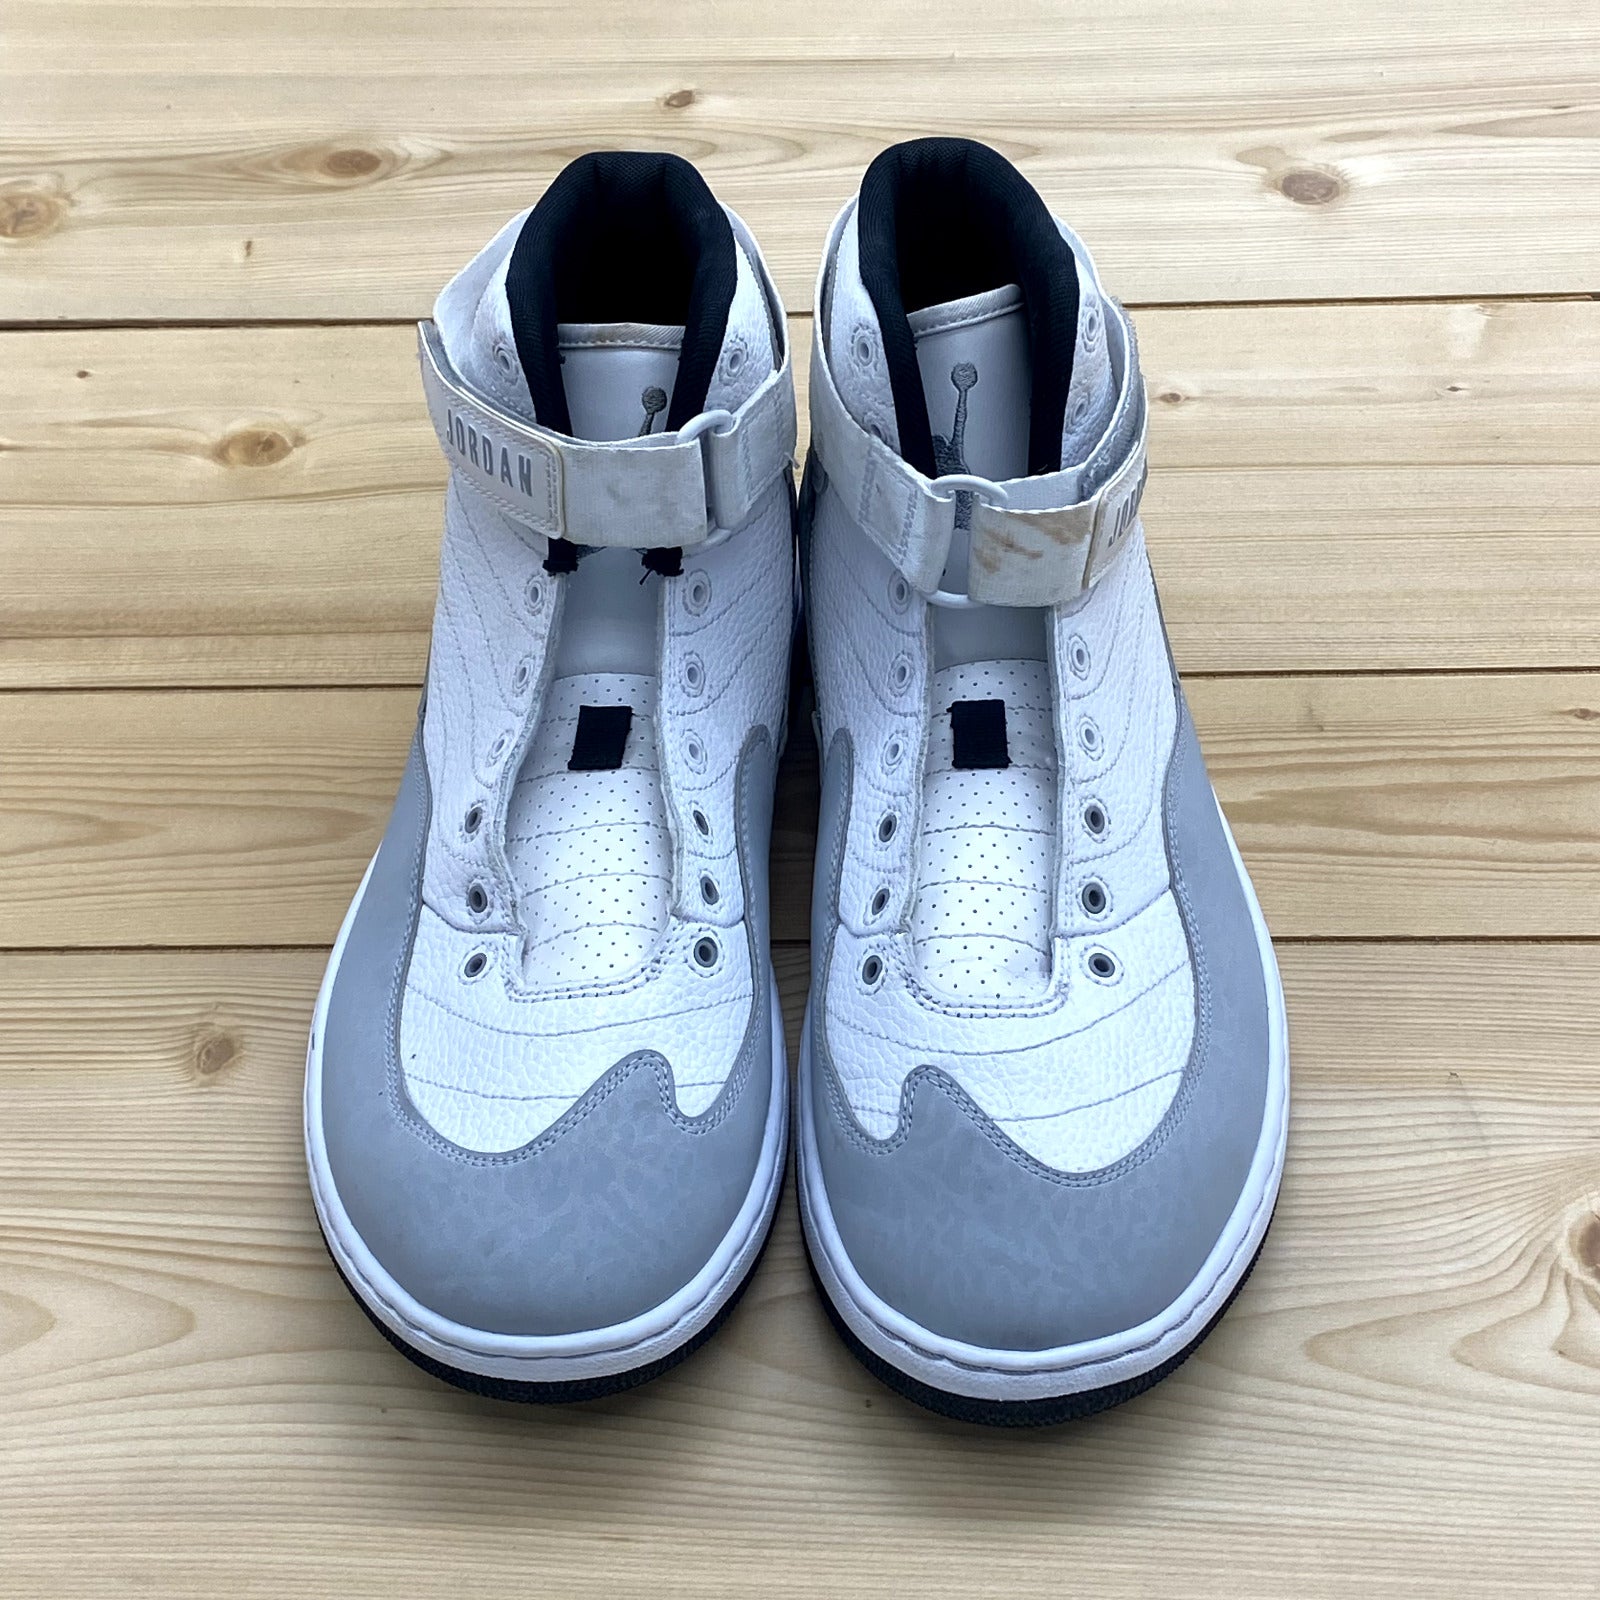 Nike Air Jordan KO 23 MID AR4493-101 WOLF GRAY White Mens Size 13 Shoes Sneakers